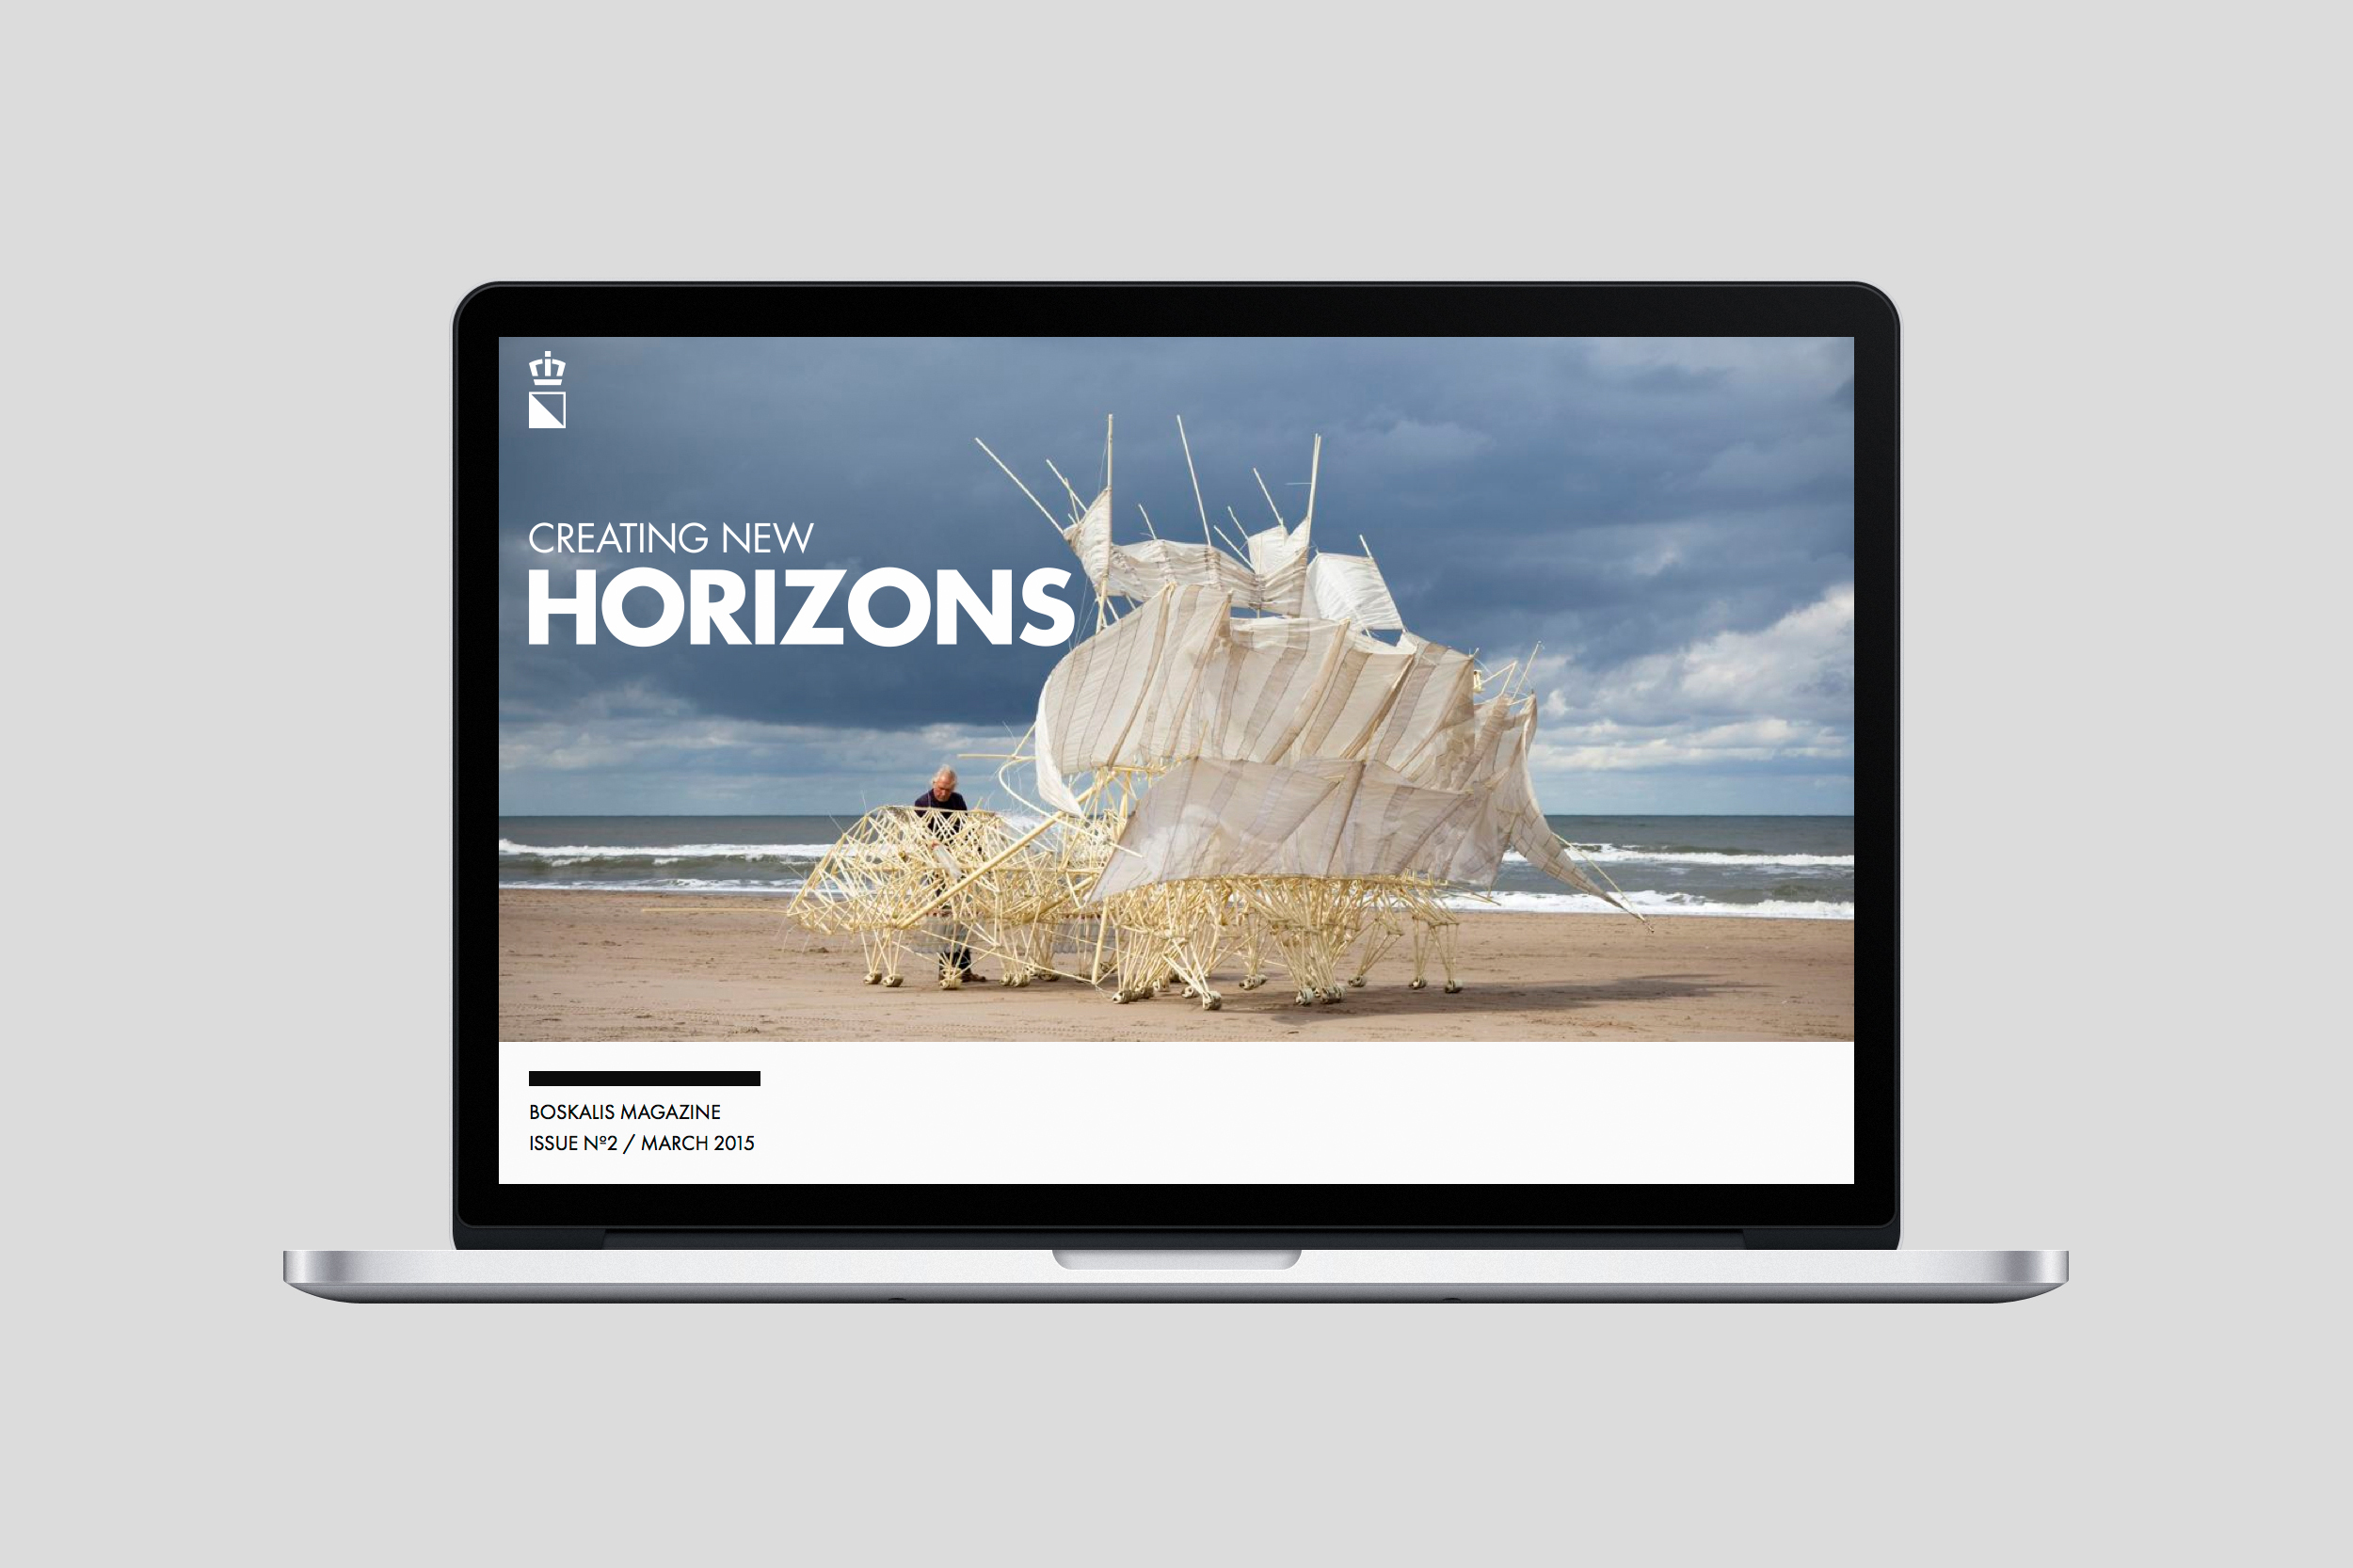 studio dumbar design visual brand identity for Boskalis the leading dredging and marine experts magazine New Horizons digital desktop design